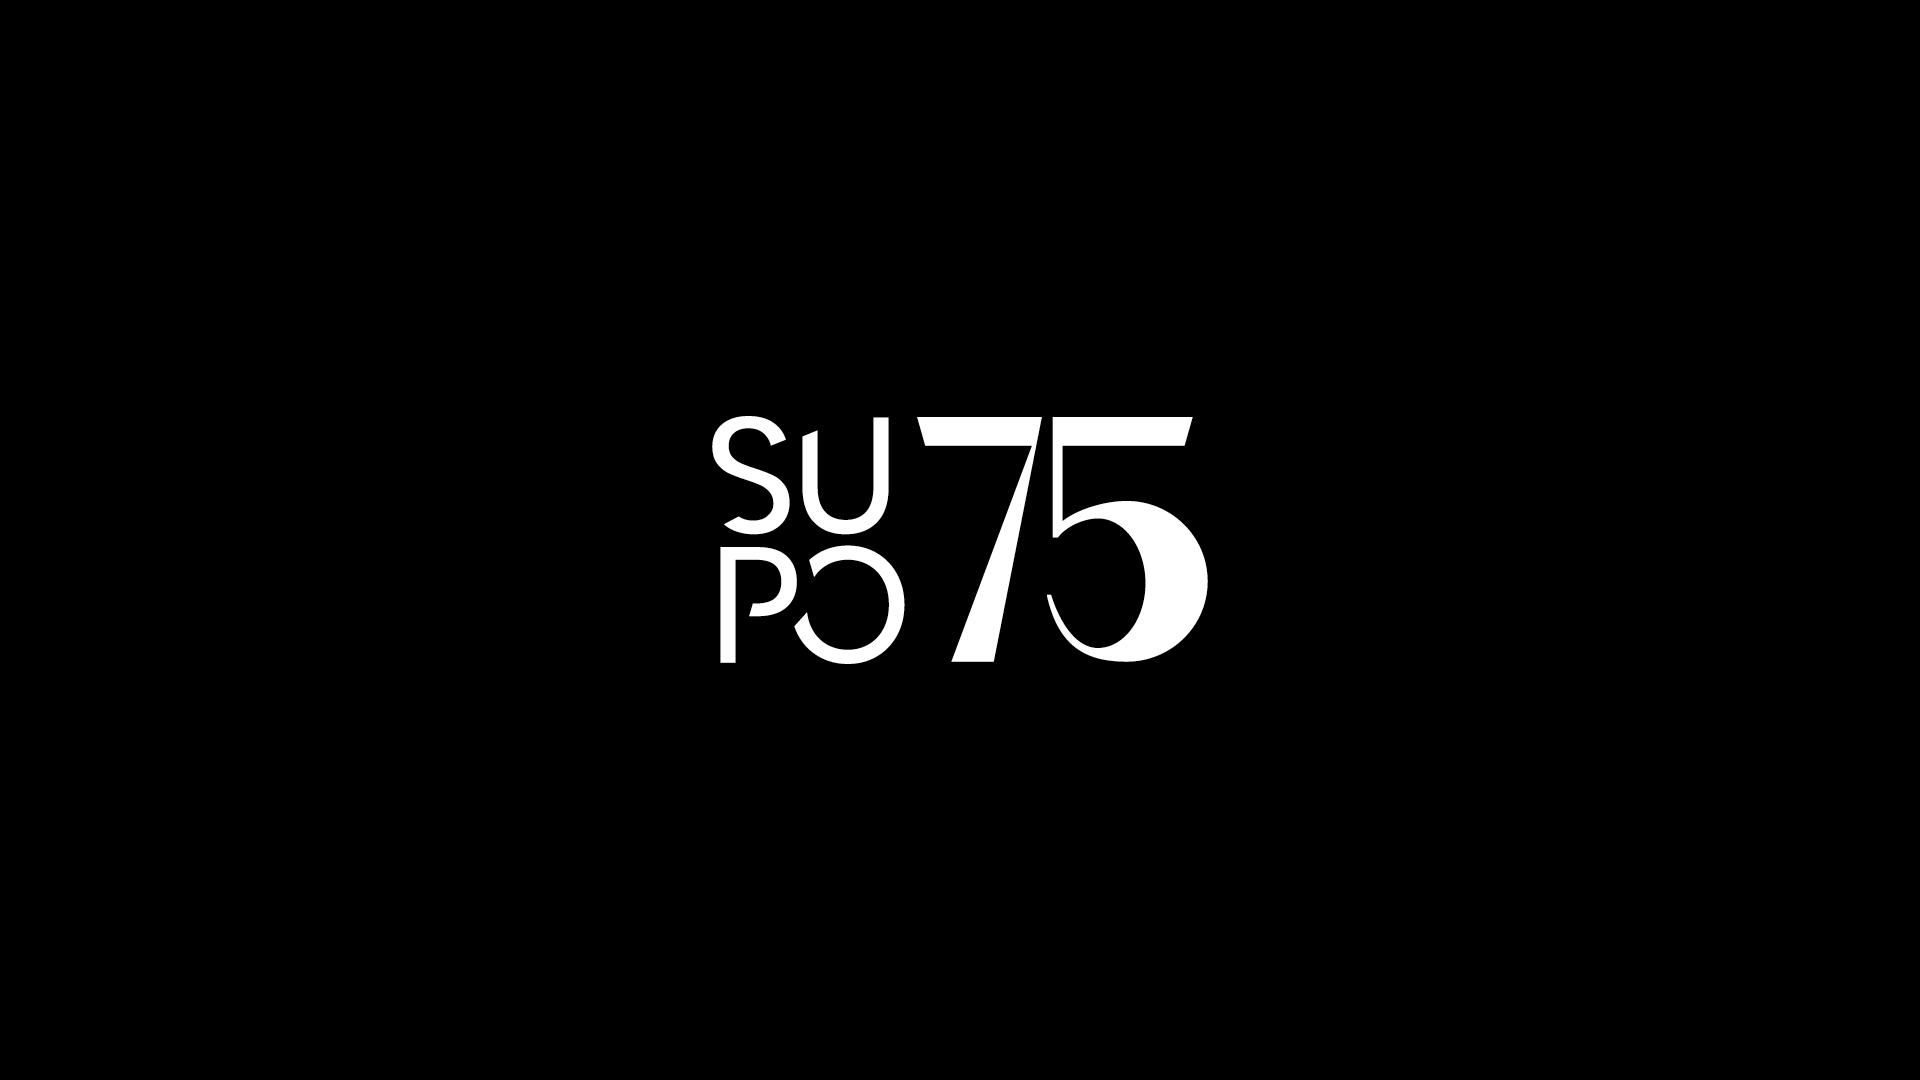 Supo-logo 75 years.